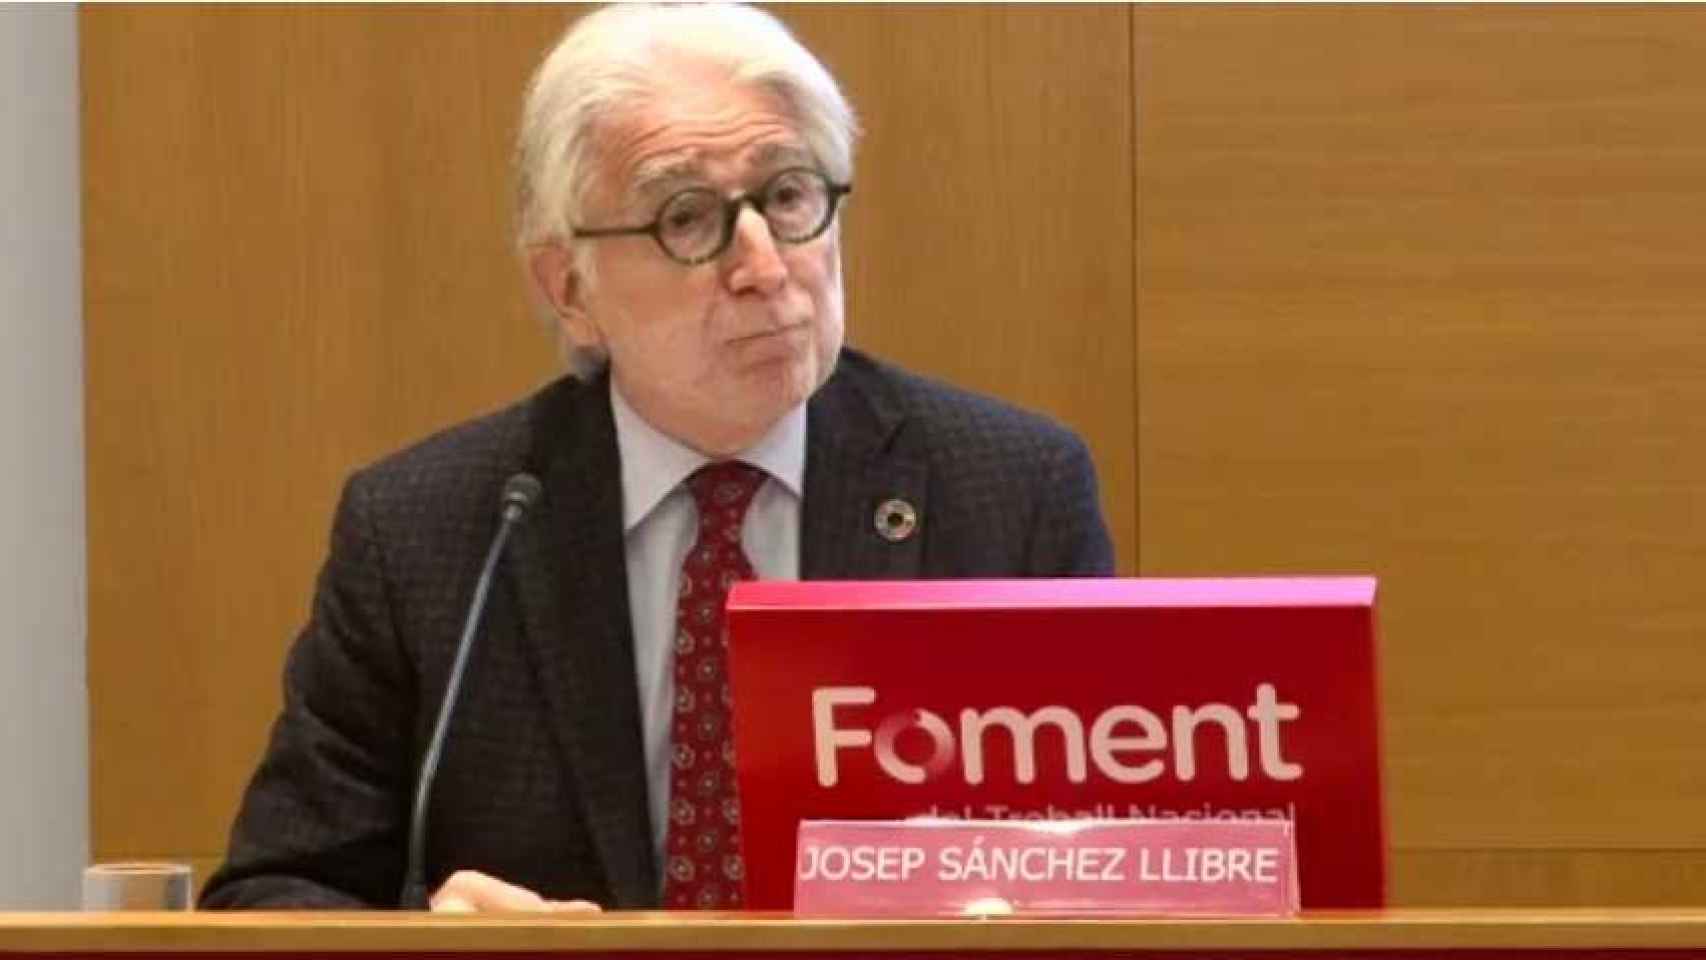 Josep Sànchez Llibre, presidente de Foment del Treball, anuncia un gran acto empresarial en noviembre / CG